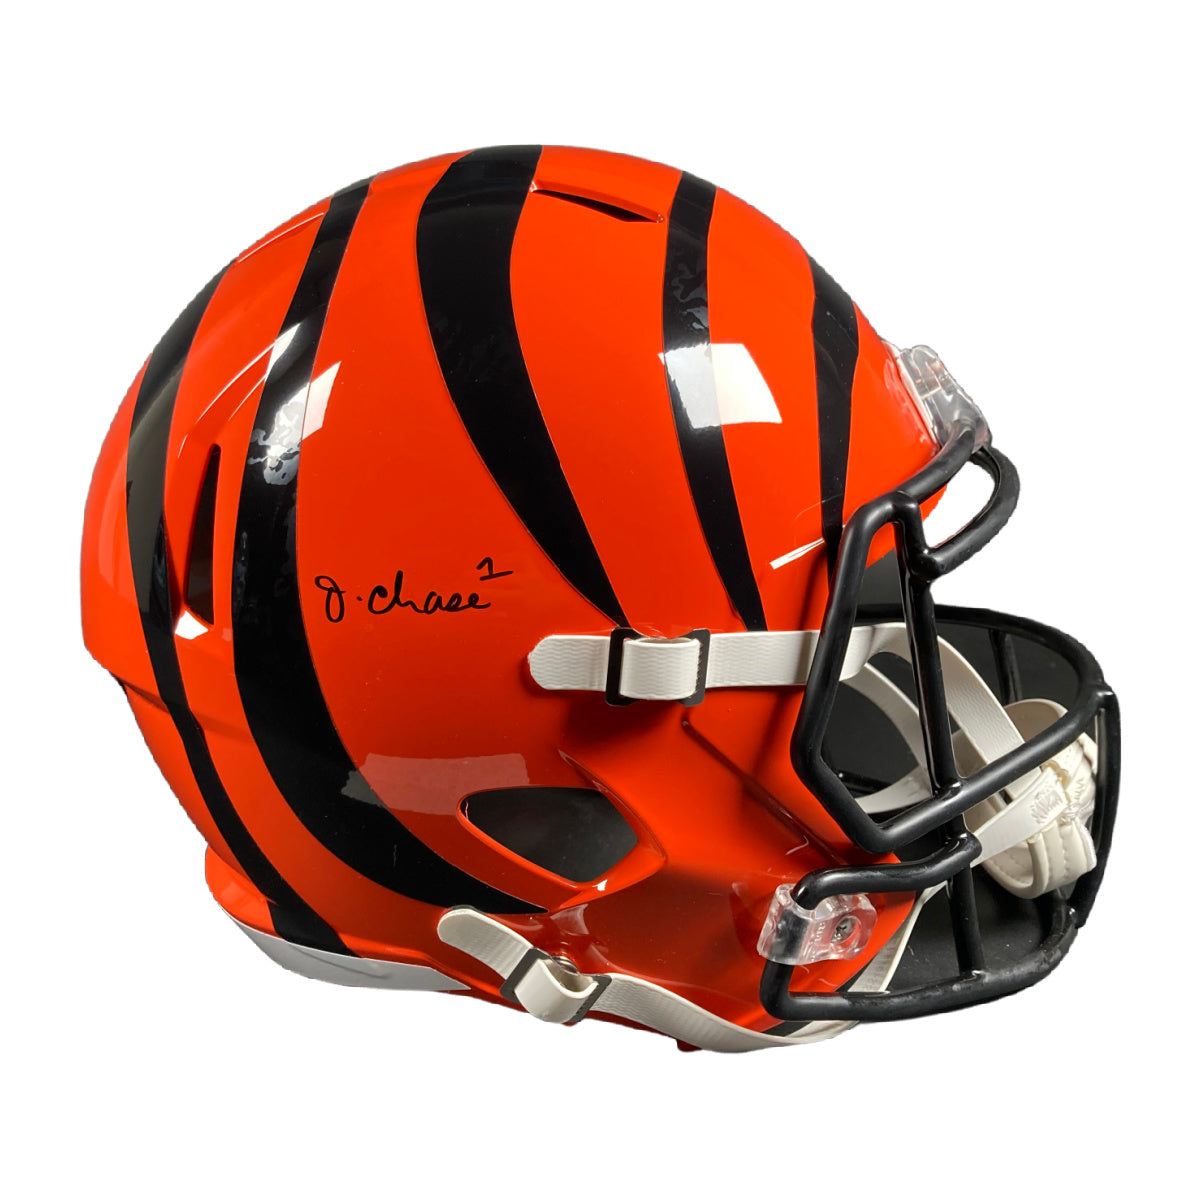 Ja'Marr Chase Signed Cincinnati Bengals FS Helmet REP Autographed BAS COA